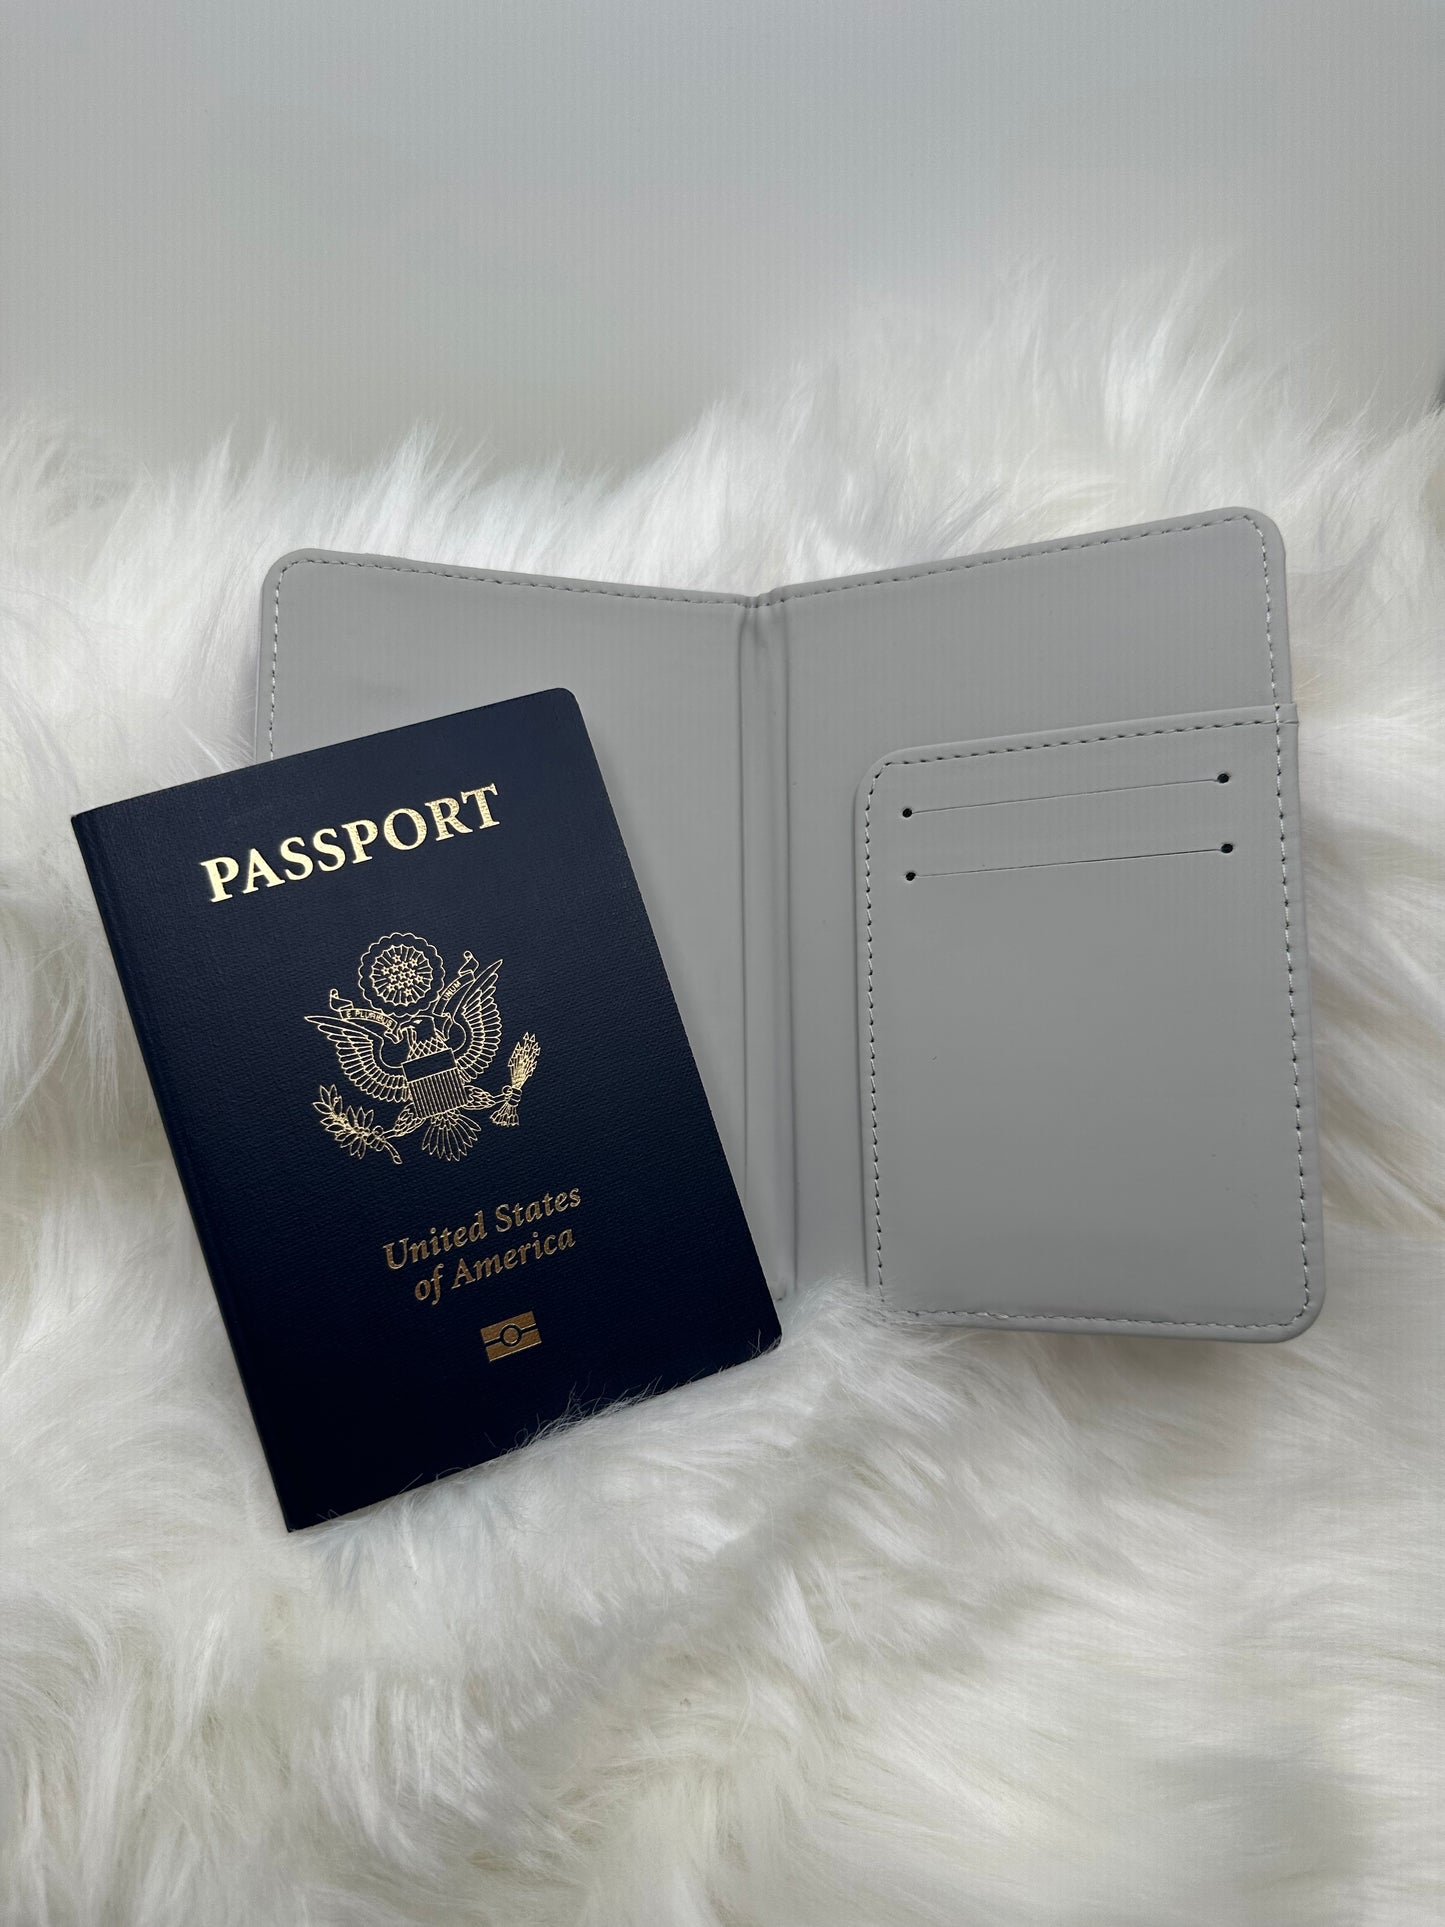 Passport Holder and Bag Tag